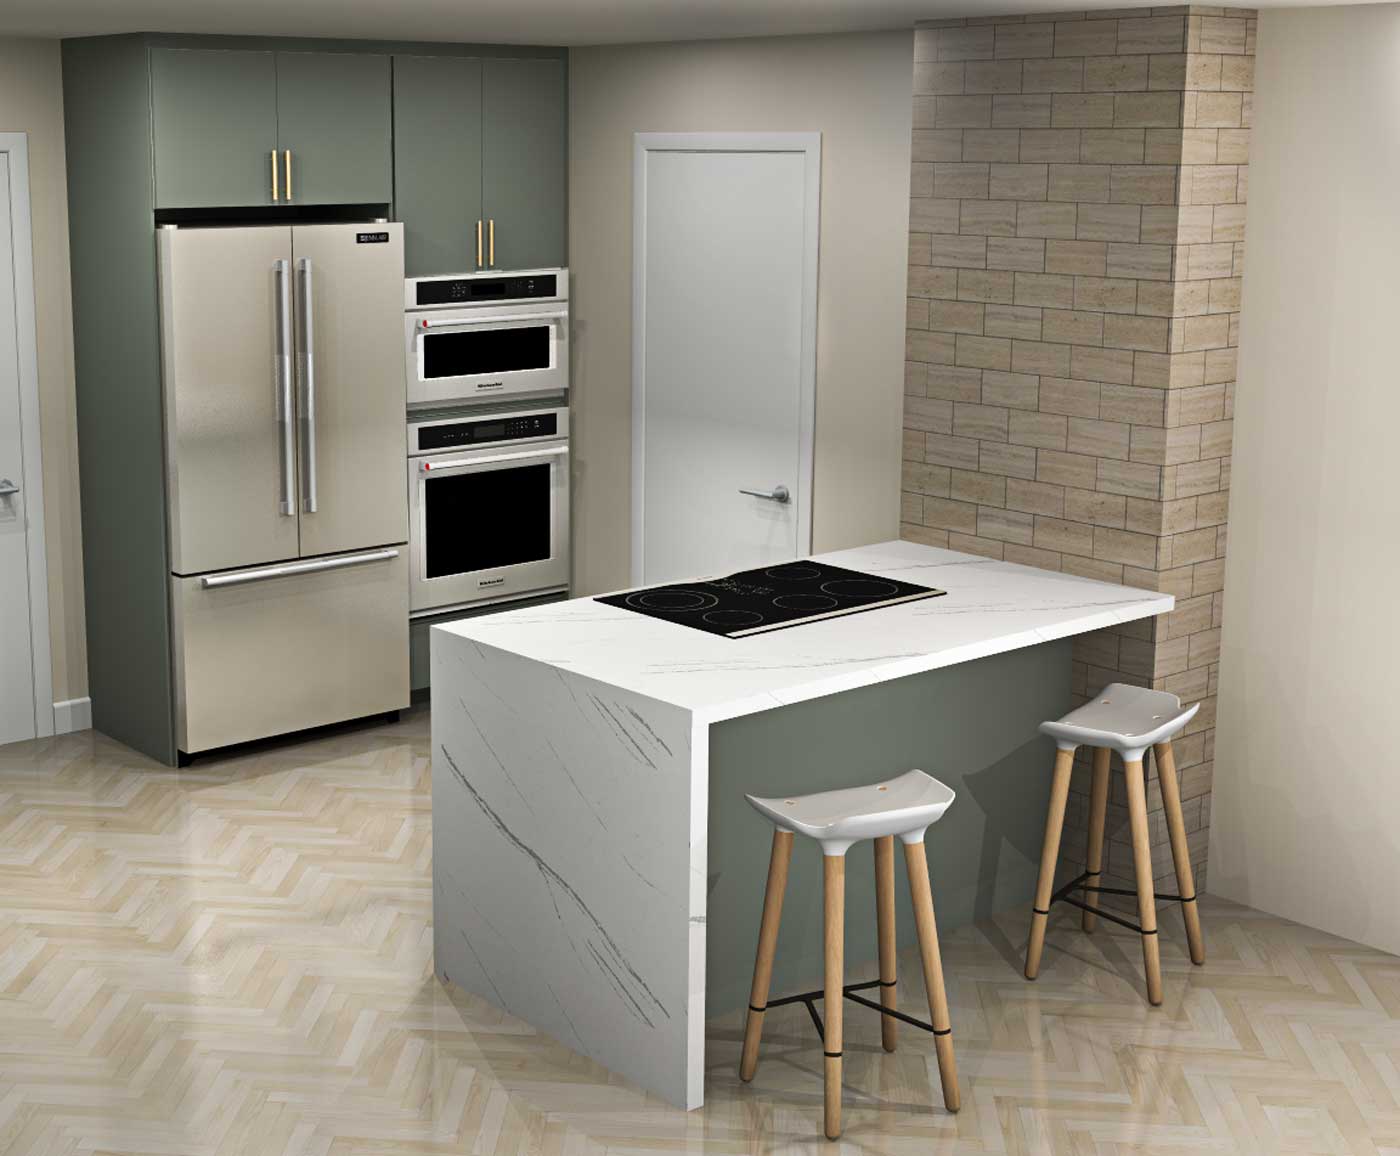 https://inspiredkitchendesign.com/wp-content/uploads/2021/08/4-understanding-appliances-in-your-ikea-kitchen.jpg